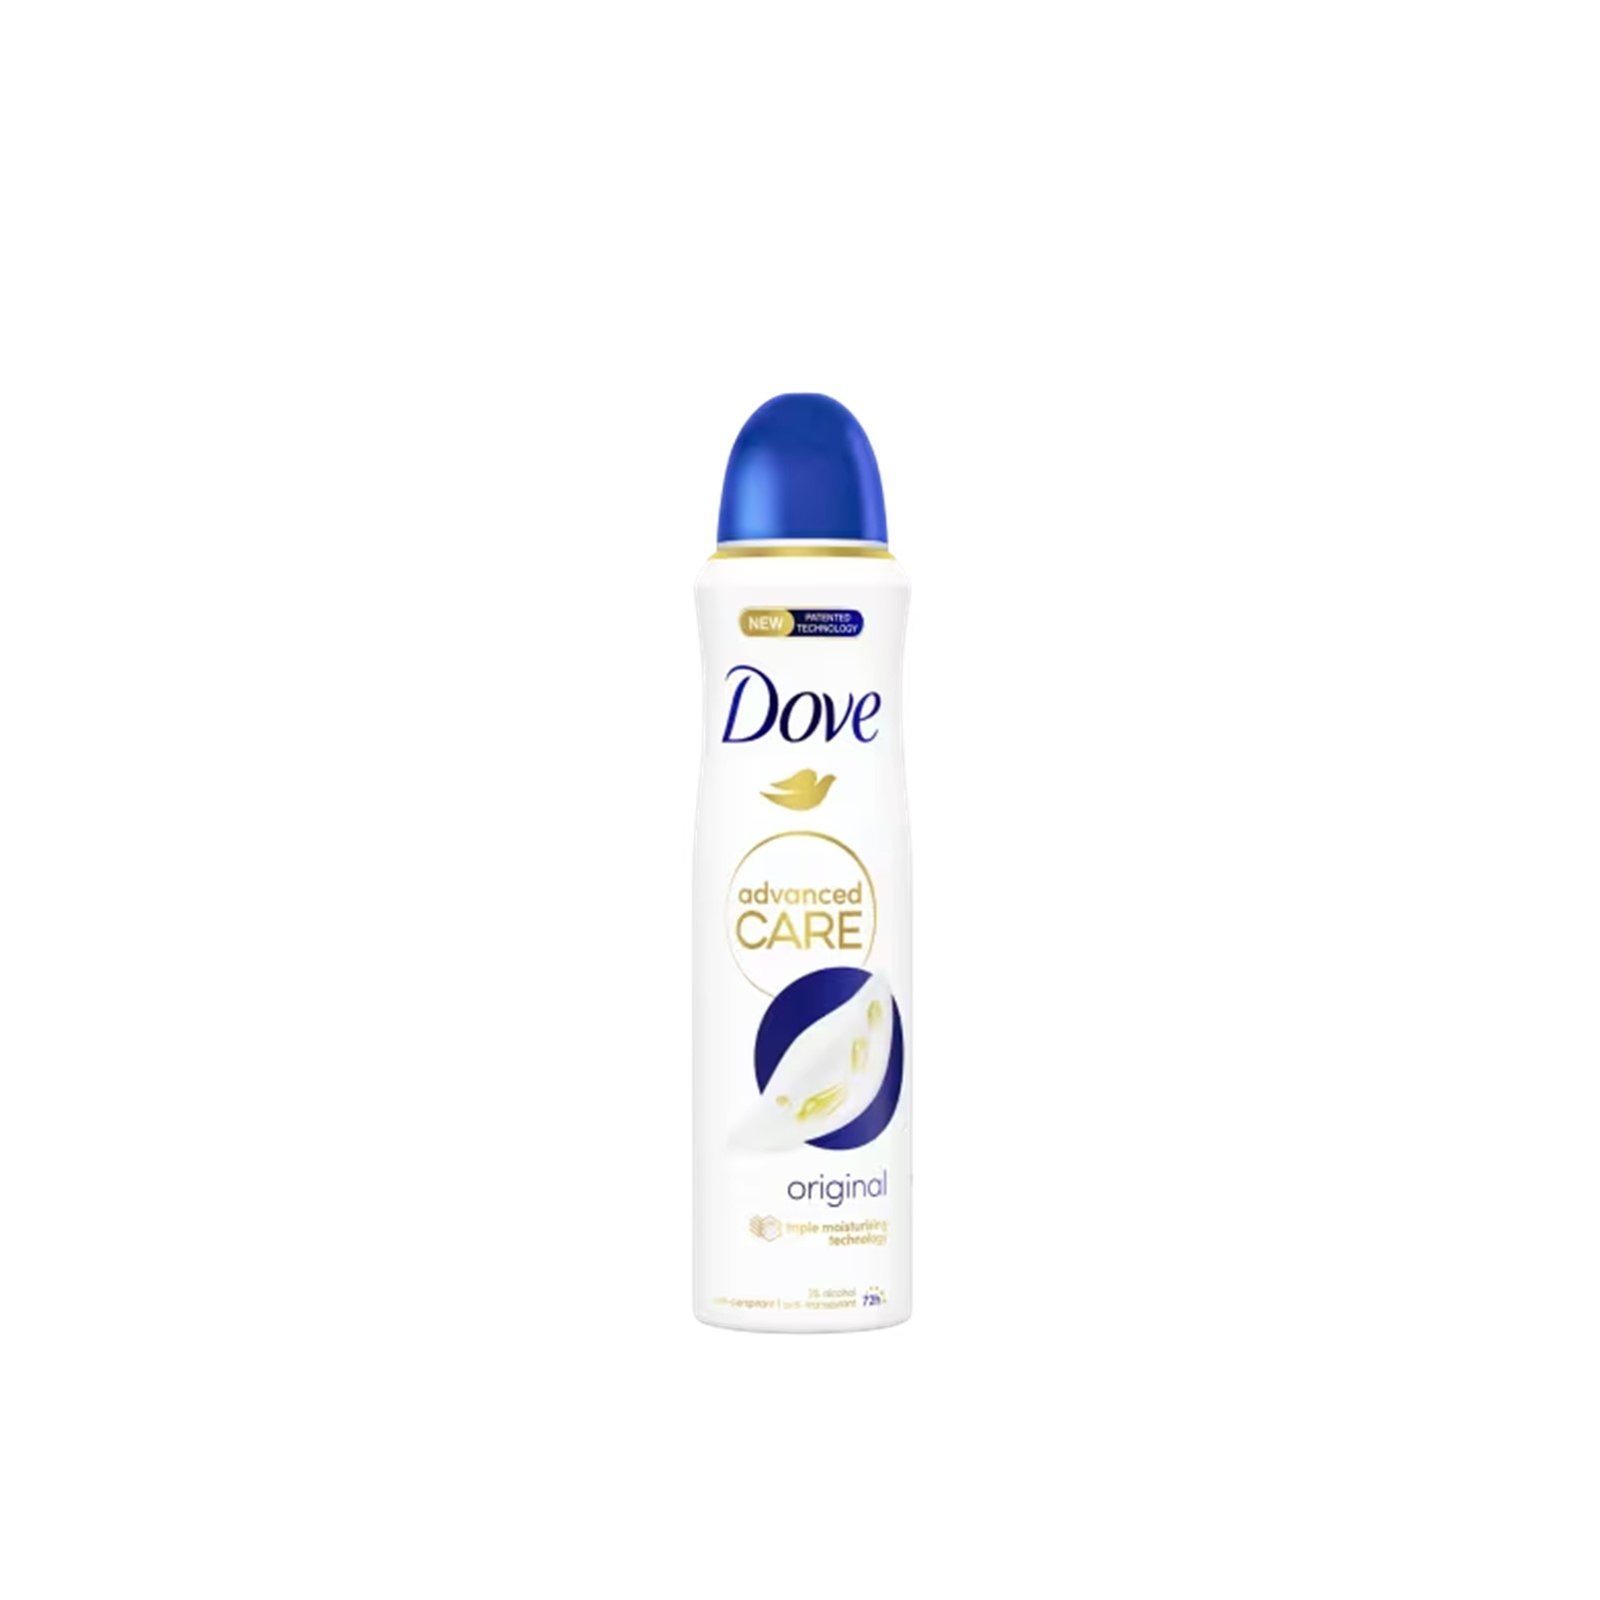 Dove Advanced Care Original 72h Anti-Perspirant Deodorant Spray 150ml (5.07 fl oz)